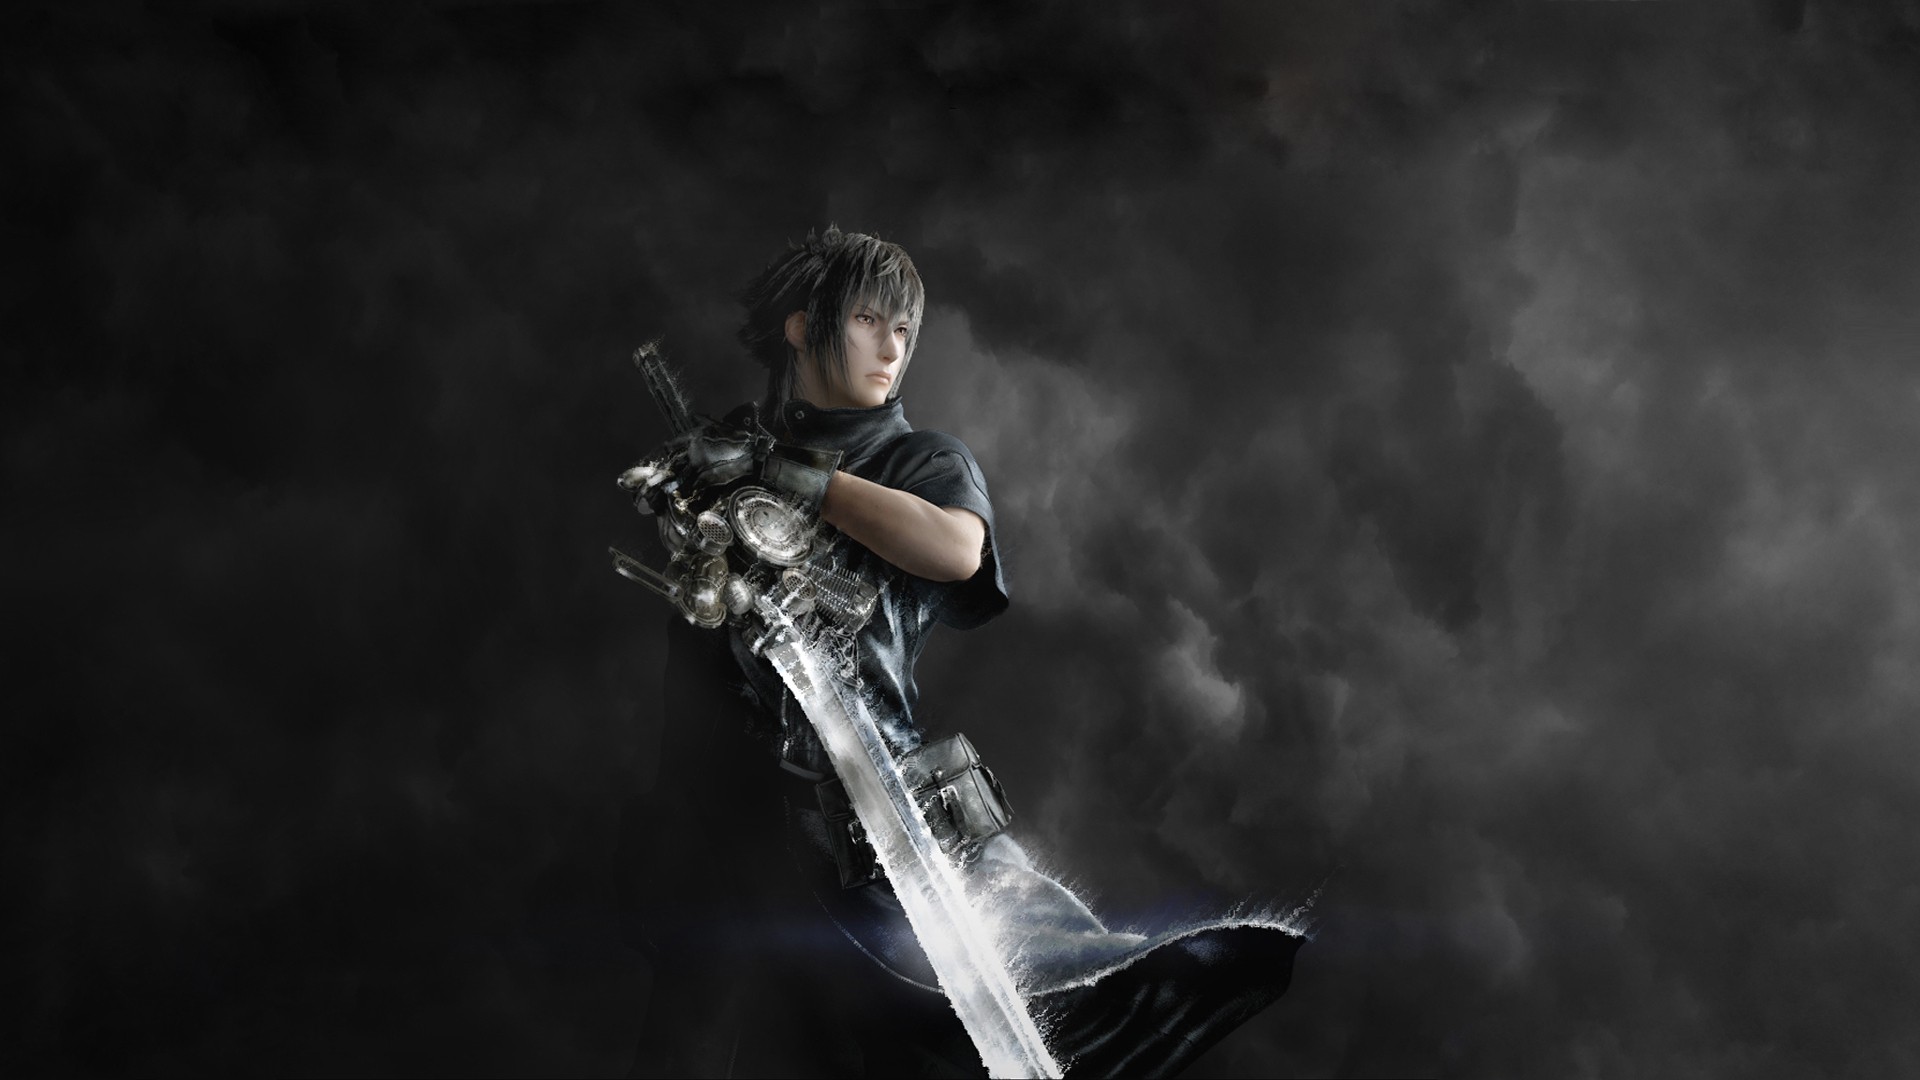 Video Game Final Fantasy Versus XIII HD Wallpaper | Background Image